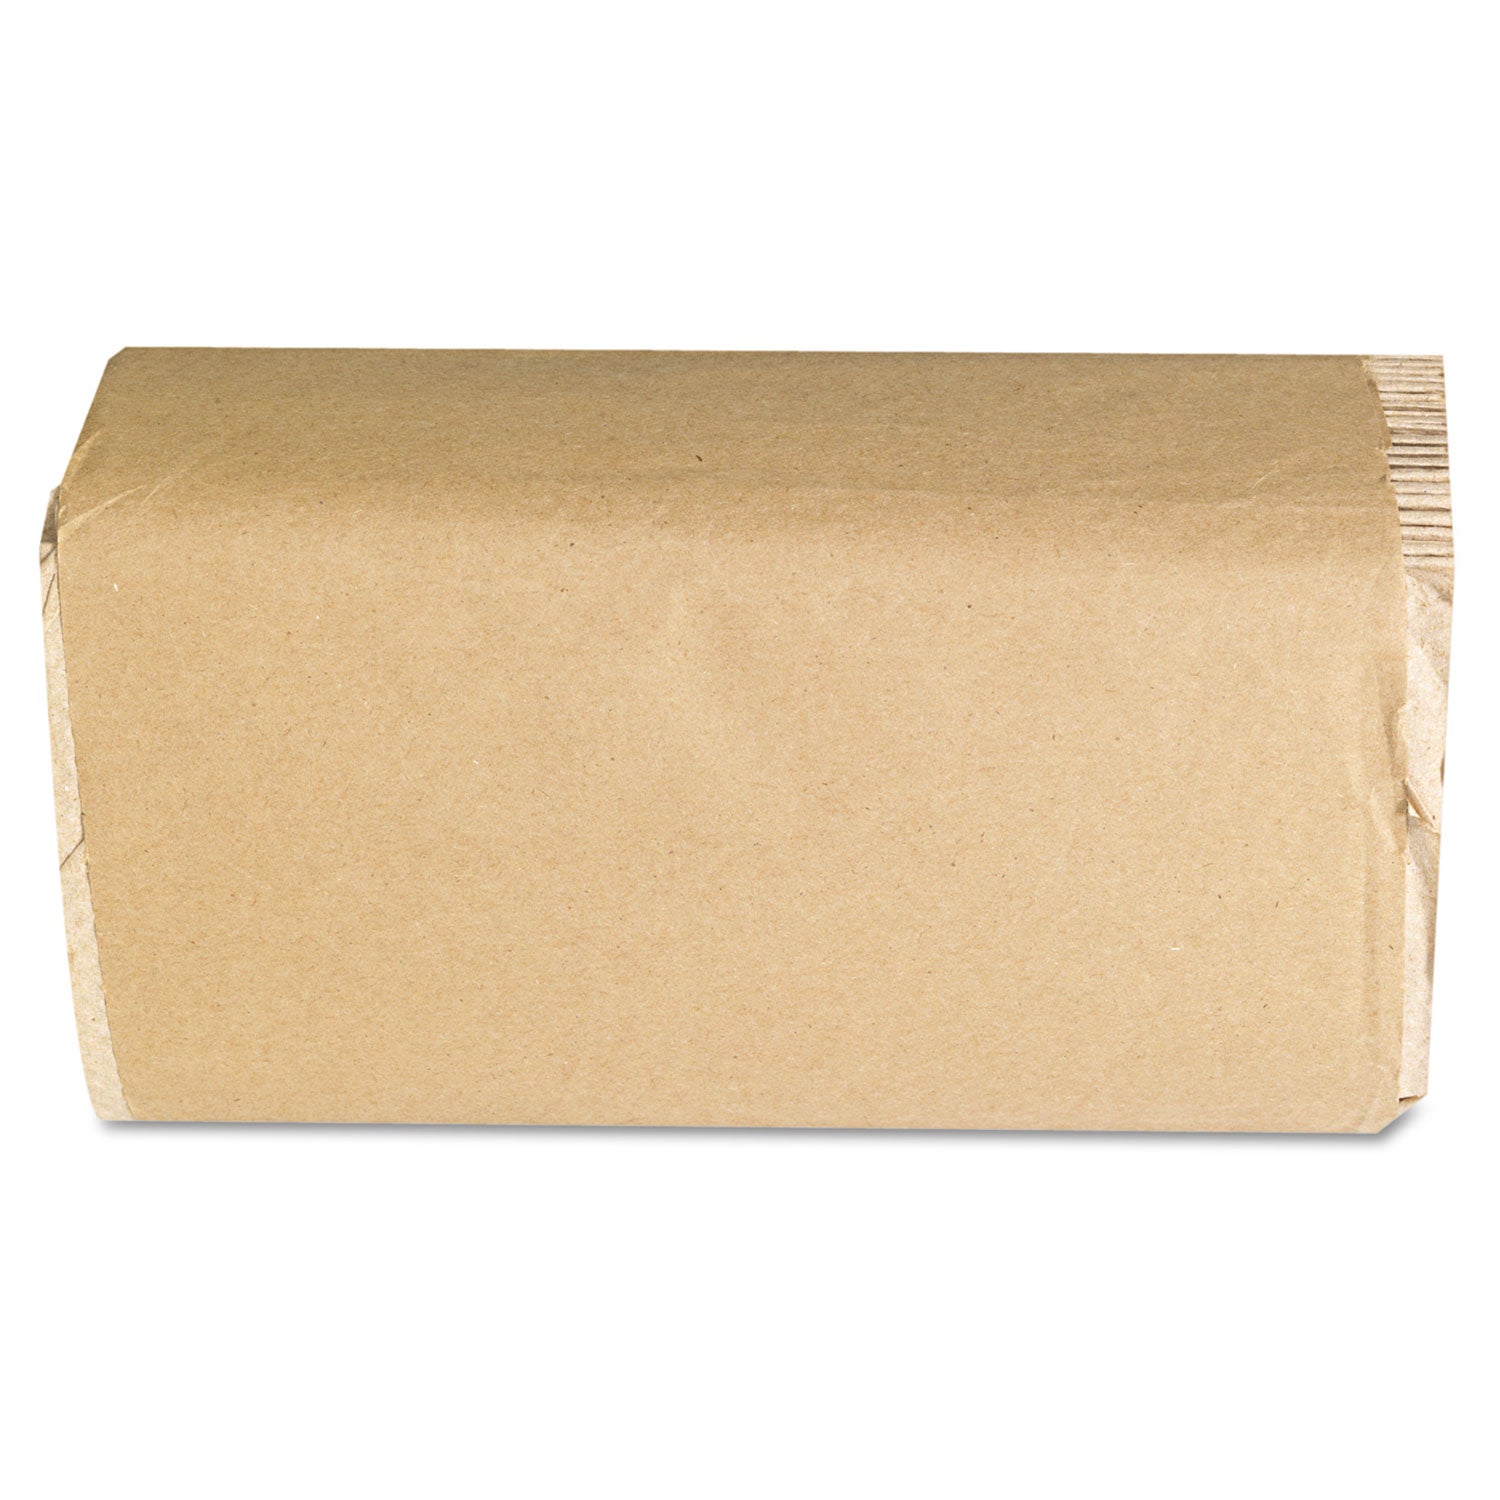 Singlefold Paper Towels, 9 x 9.45, Natural, 250/Pack, 16 Packs/Carton - 